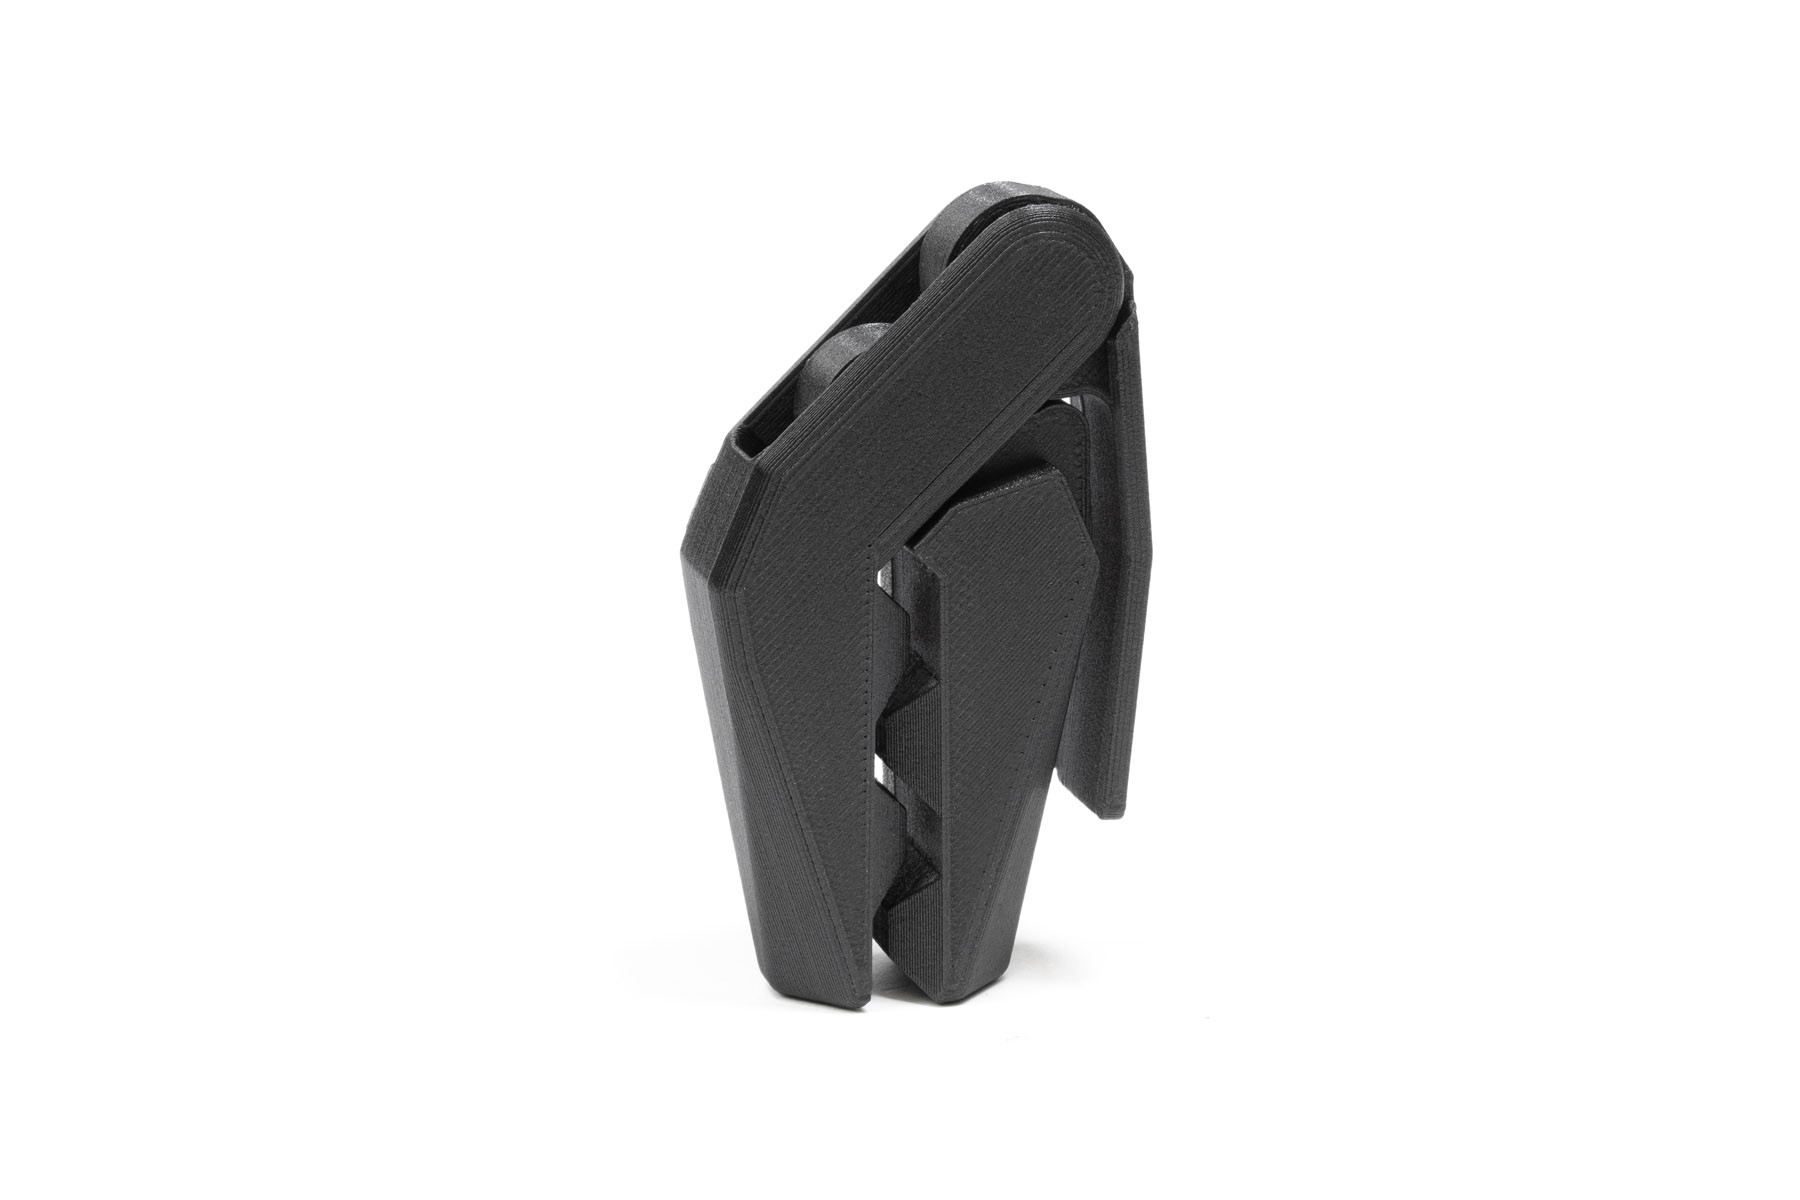 Prusament PETG Carbon Fiber Black 1kg  Original Prusa 3D printers directly  from Josef Prusa